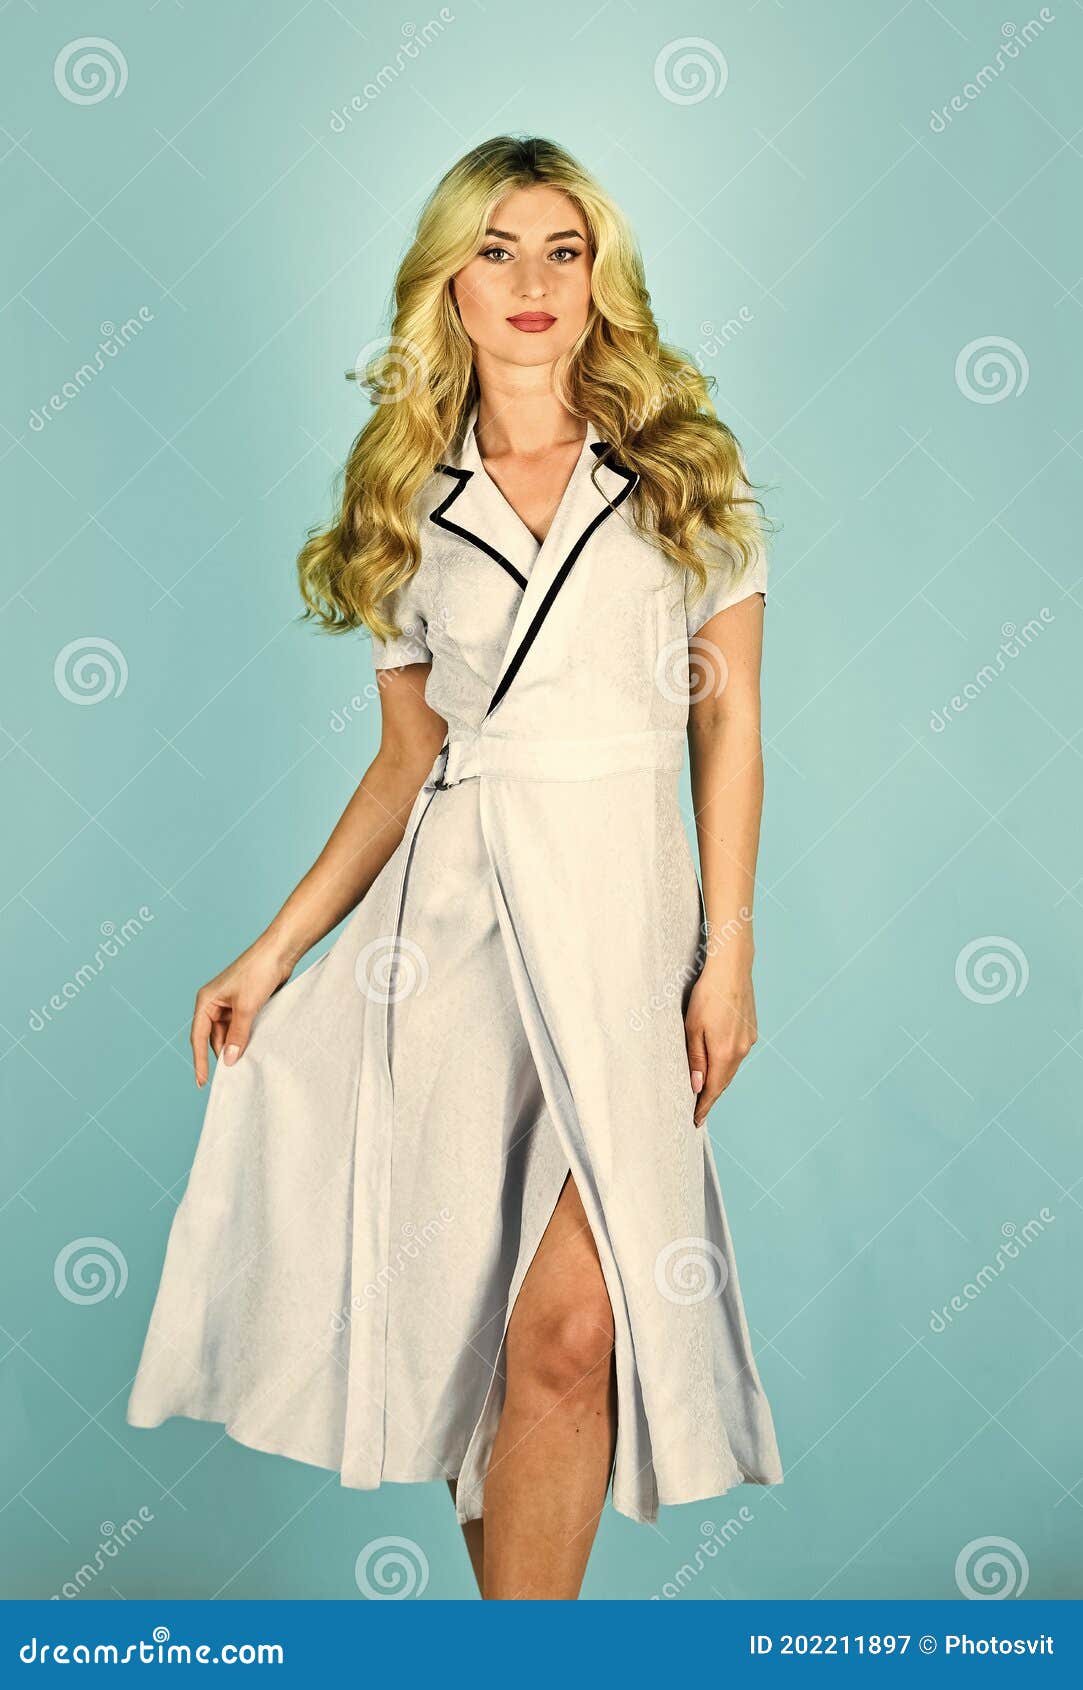 TYLBkk Polka Dots Dress for Women Fashion Dress Squared Neck Dress 1940s  Dresses Sleeveless Dress Style Bow Retro Dress Woman Solid Bow Dress -  Walmart.com